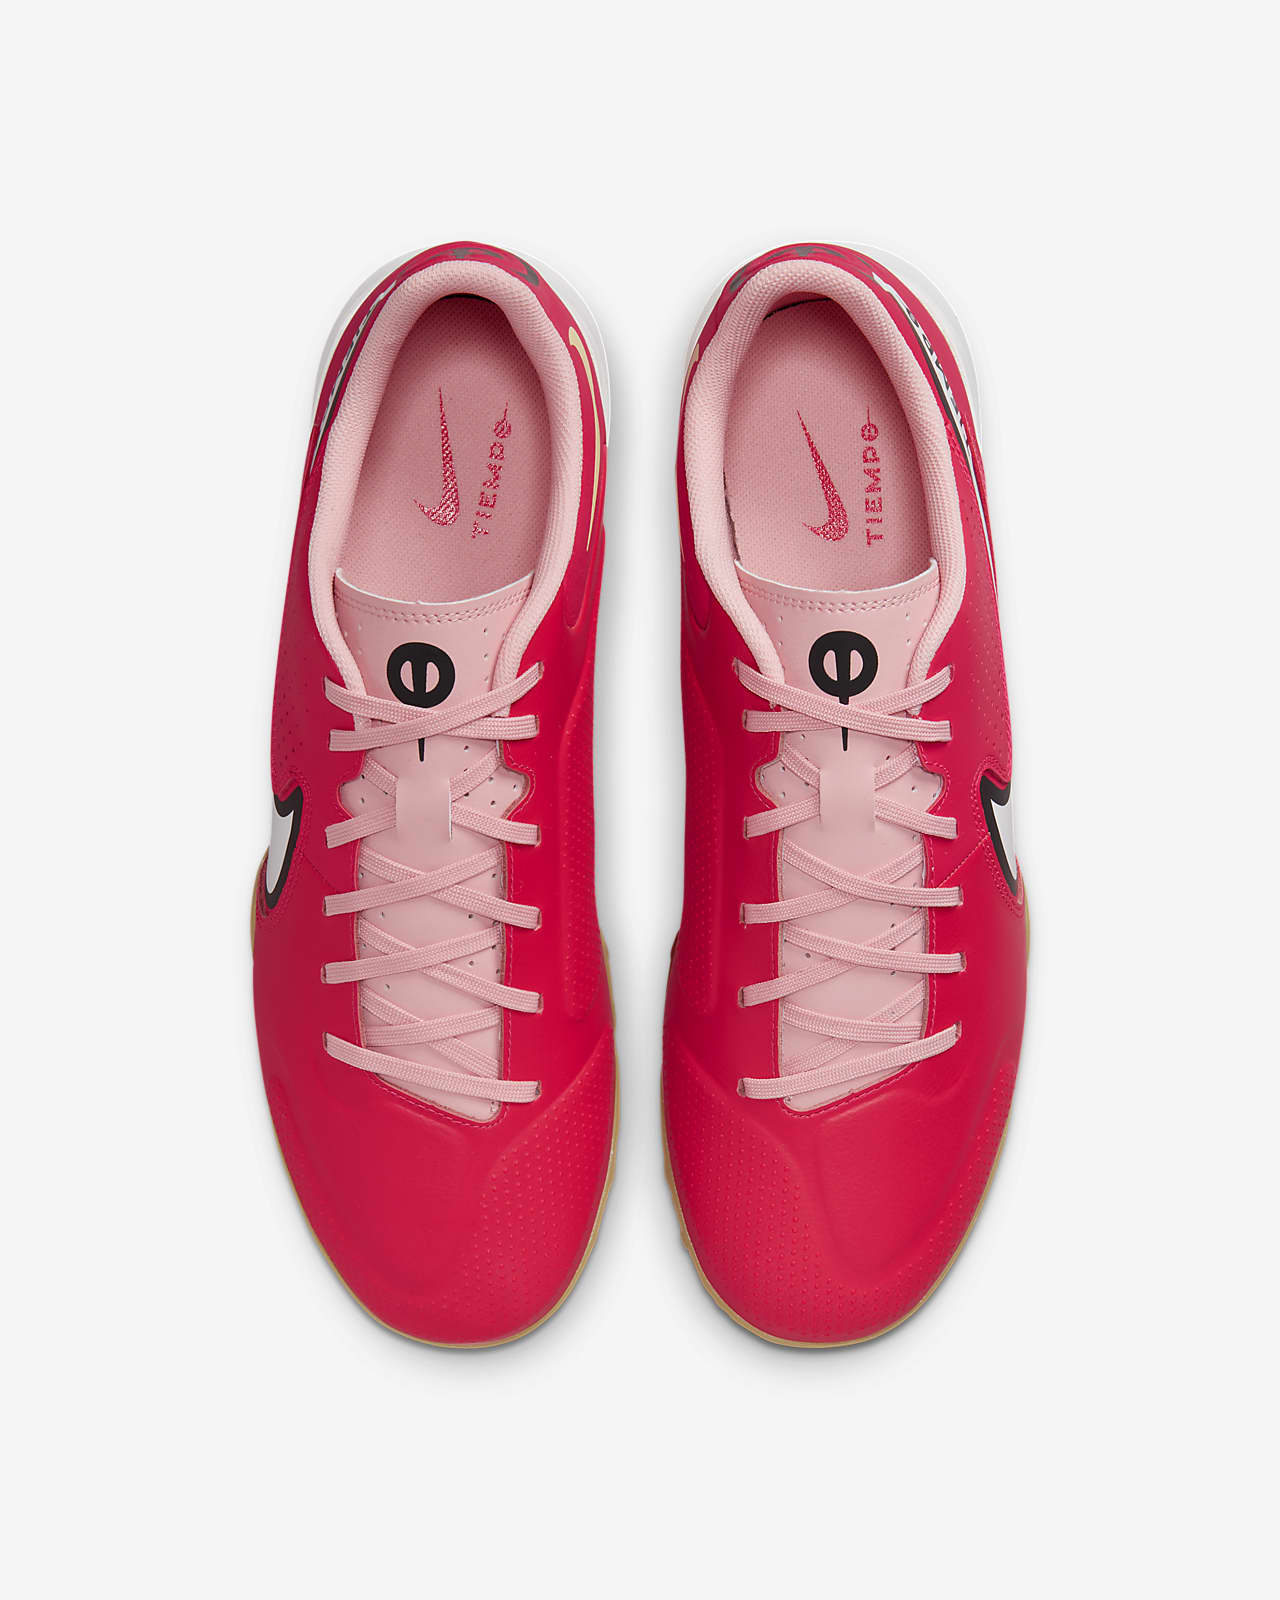 Soccer Legend TF Academy Nike 9 Turf Shoe. Tiempo